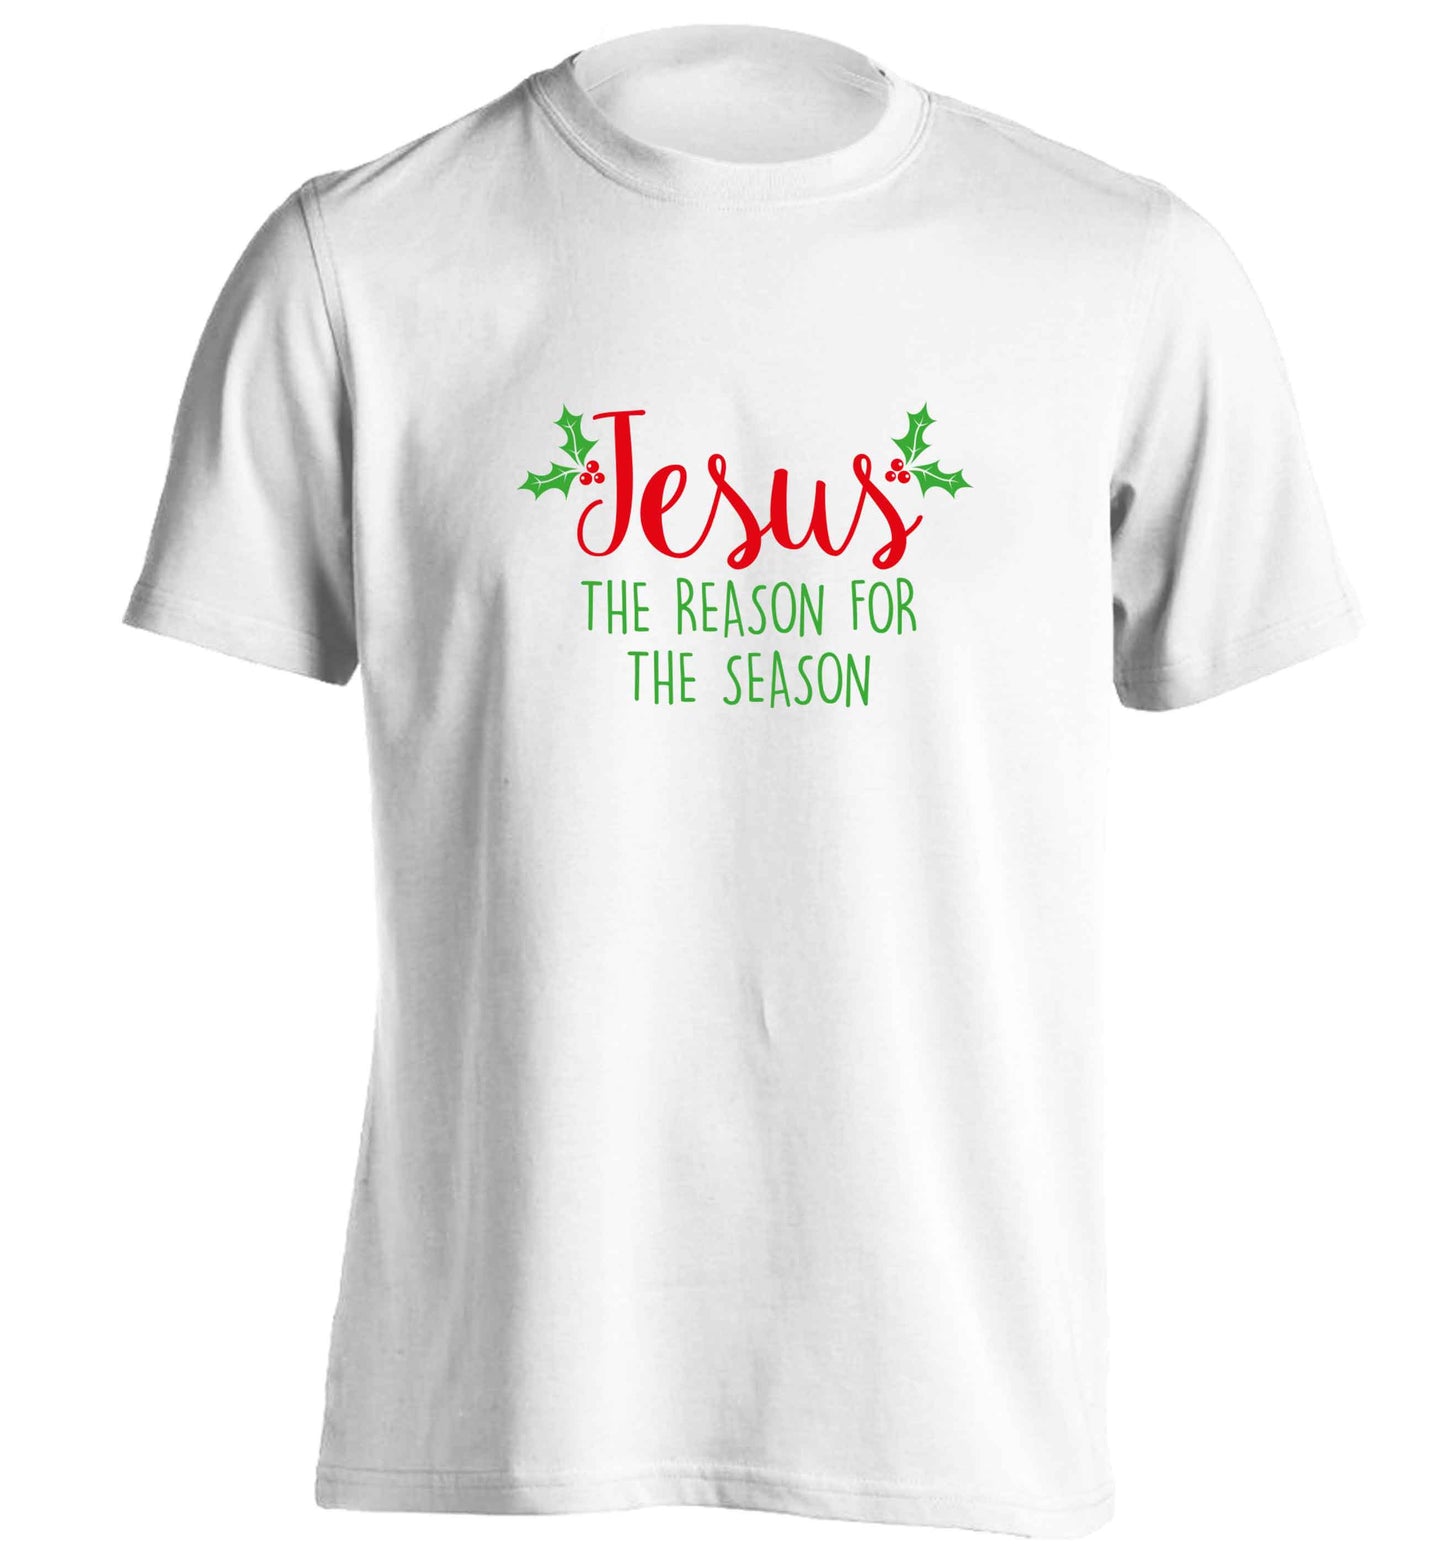 Jesus the reason for the season adults unisex white Tshirt 2XL